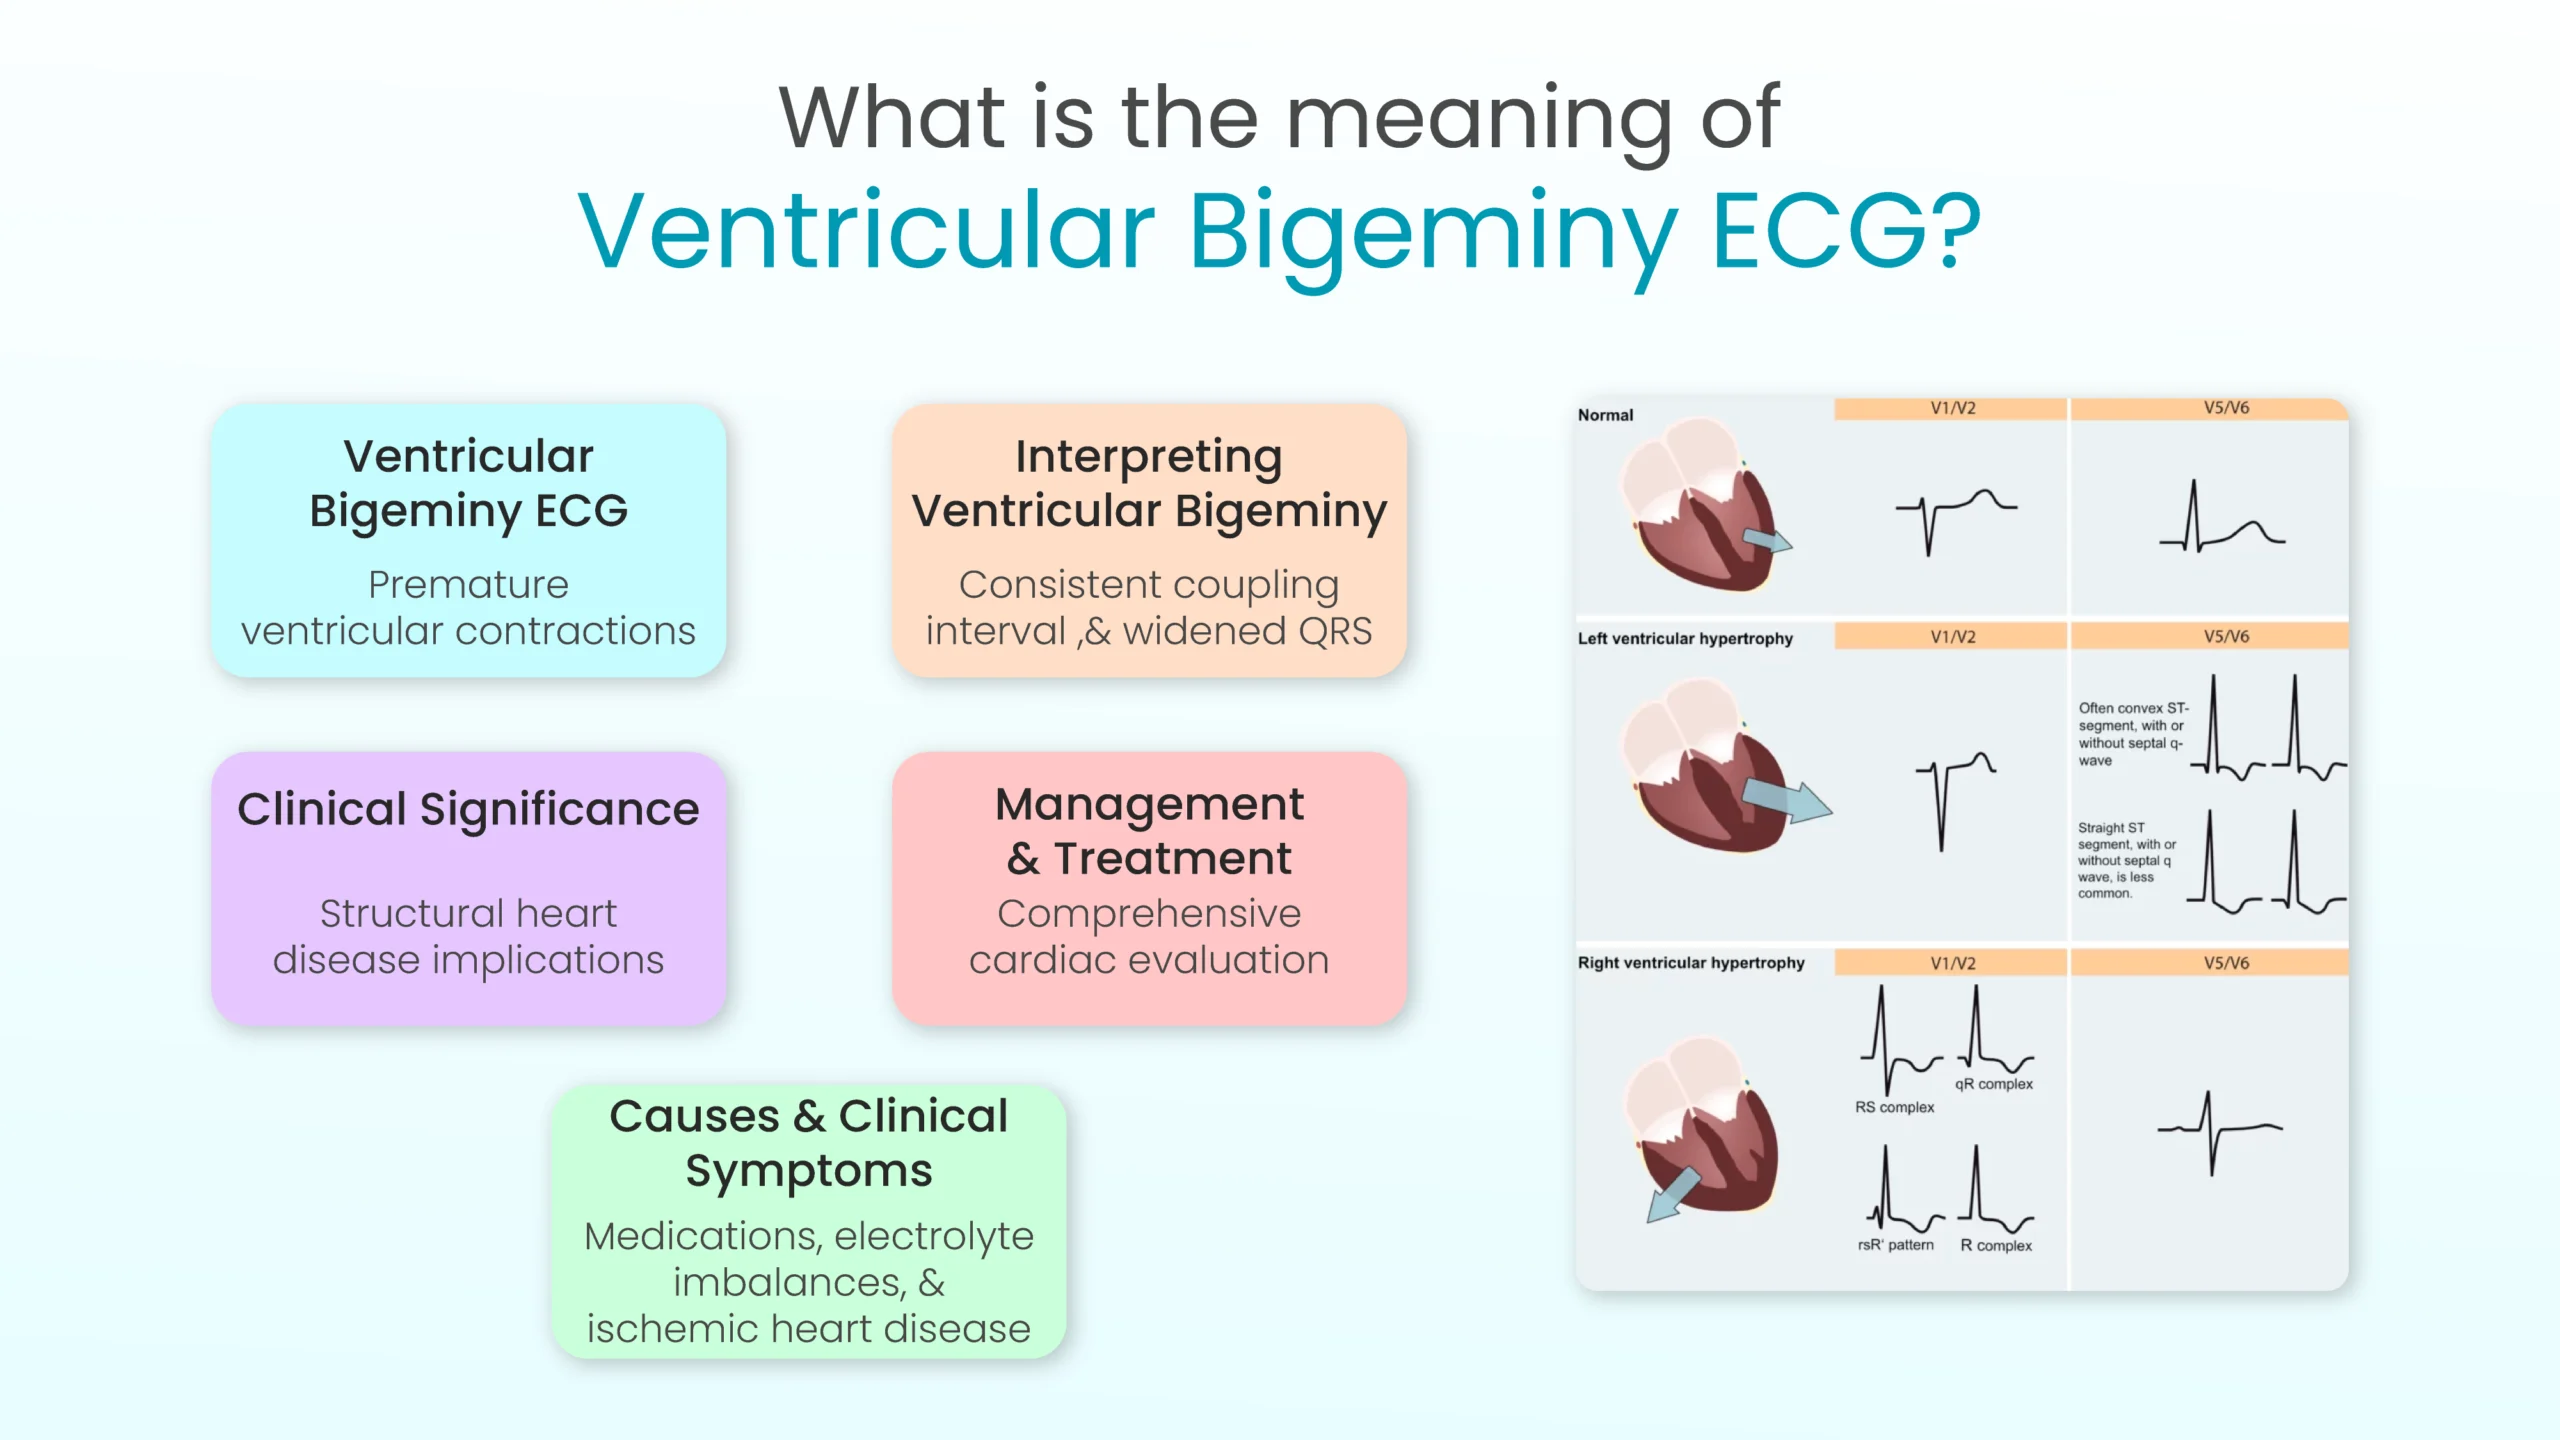 Ventricular Bigeminy ECG